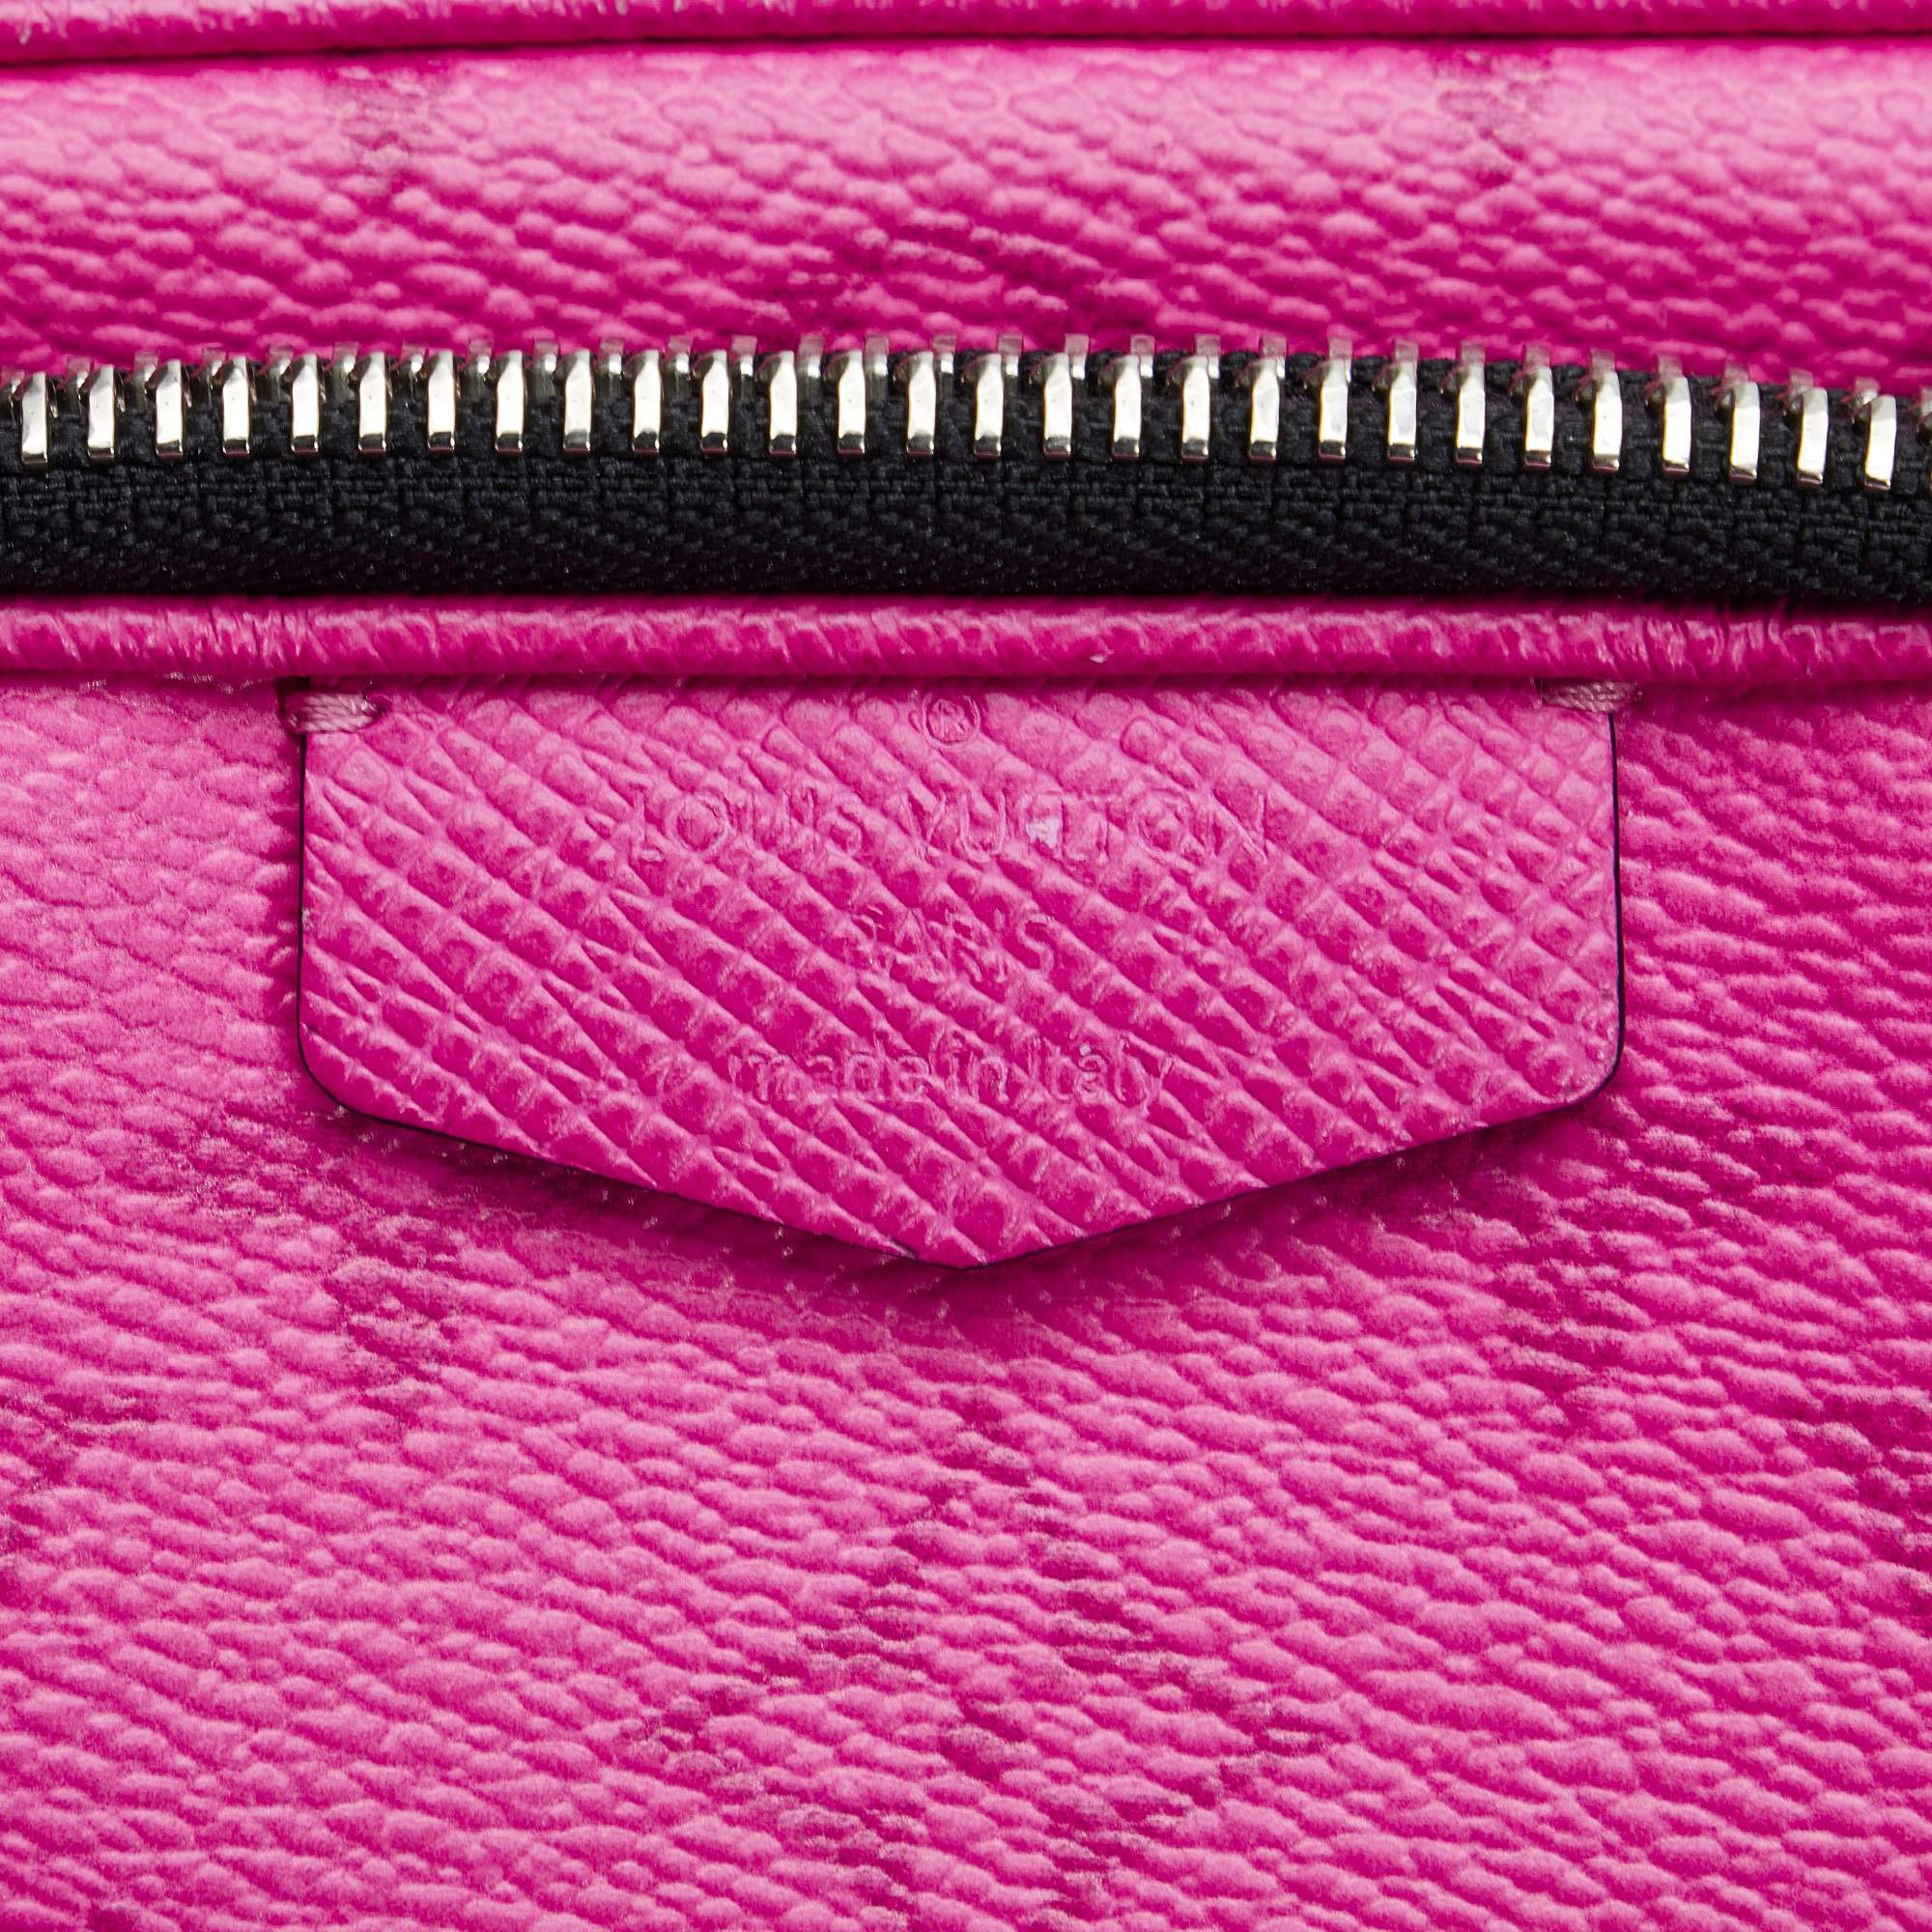 Louis Vuitton Paris American Flag Pink Handbags - Tagotee